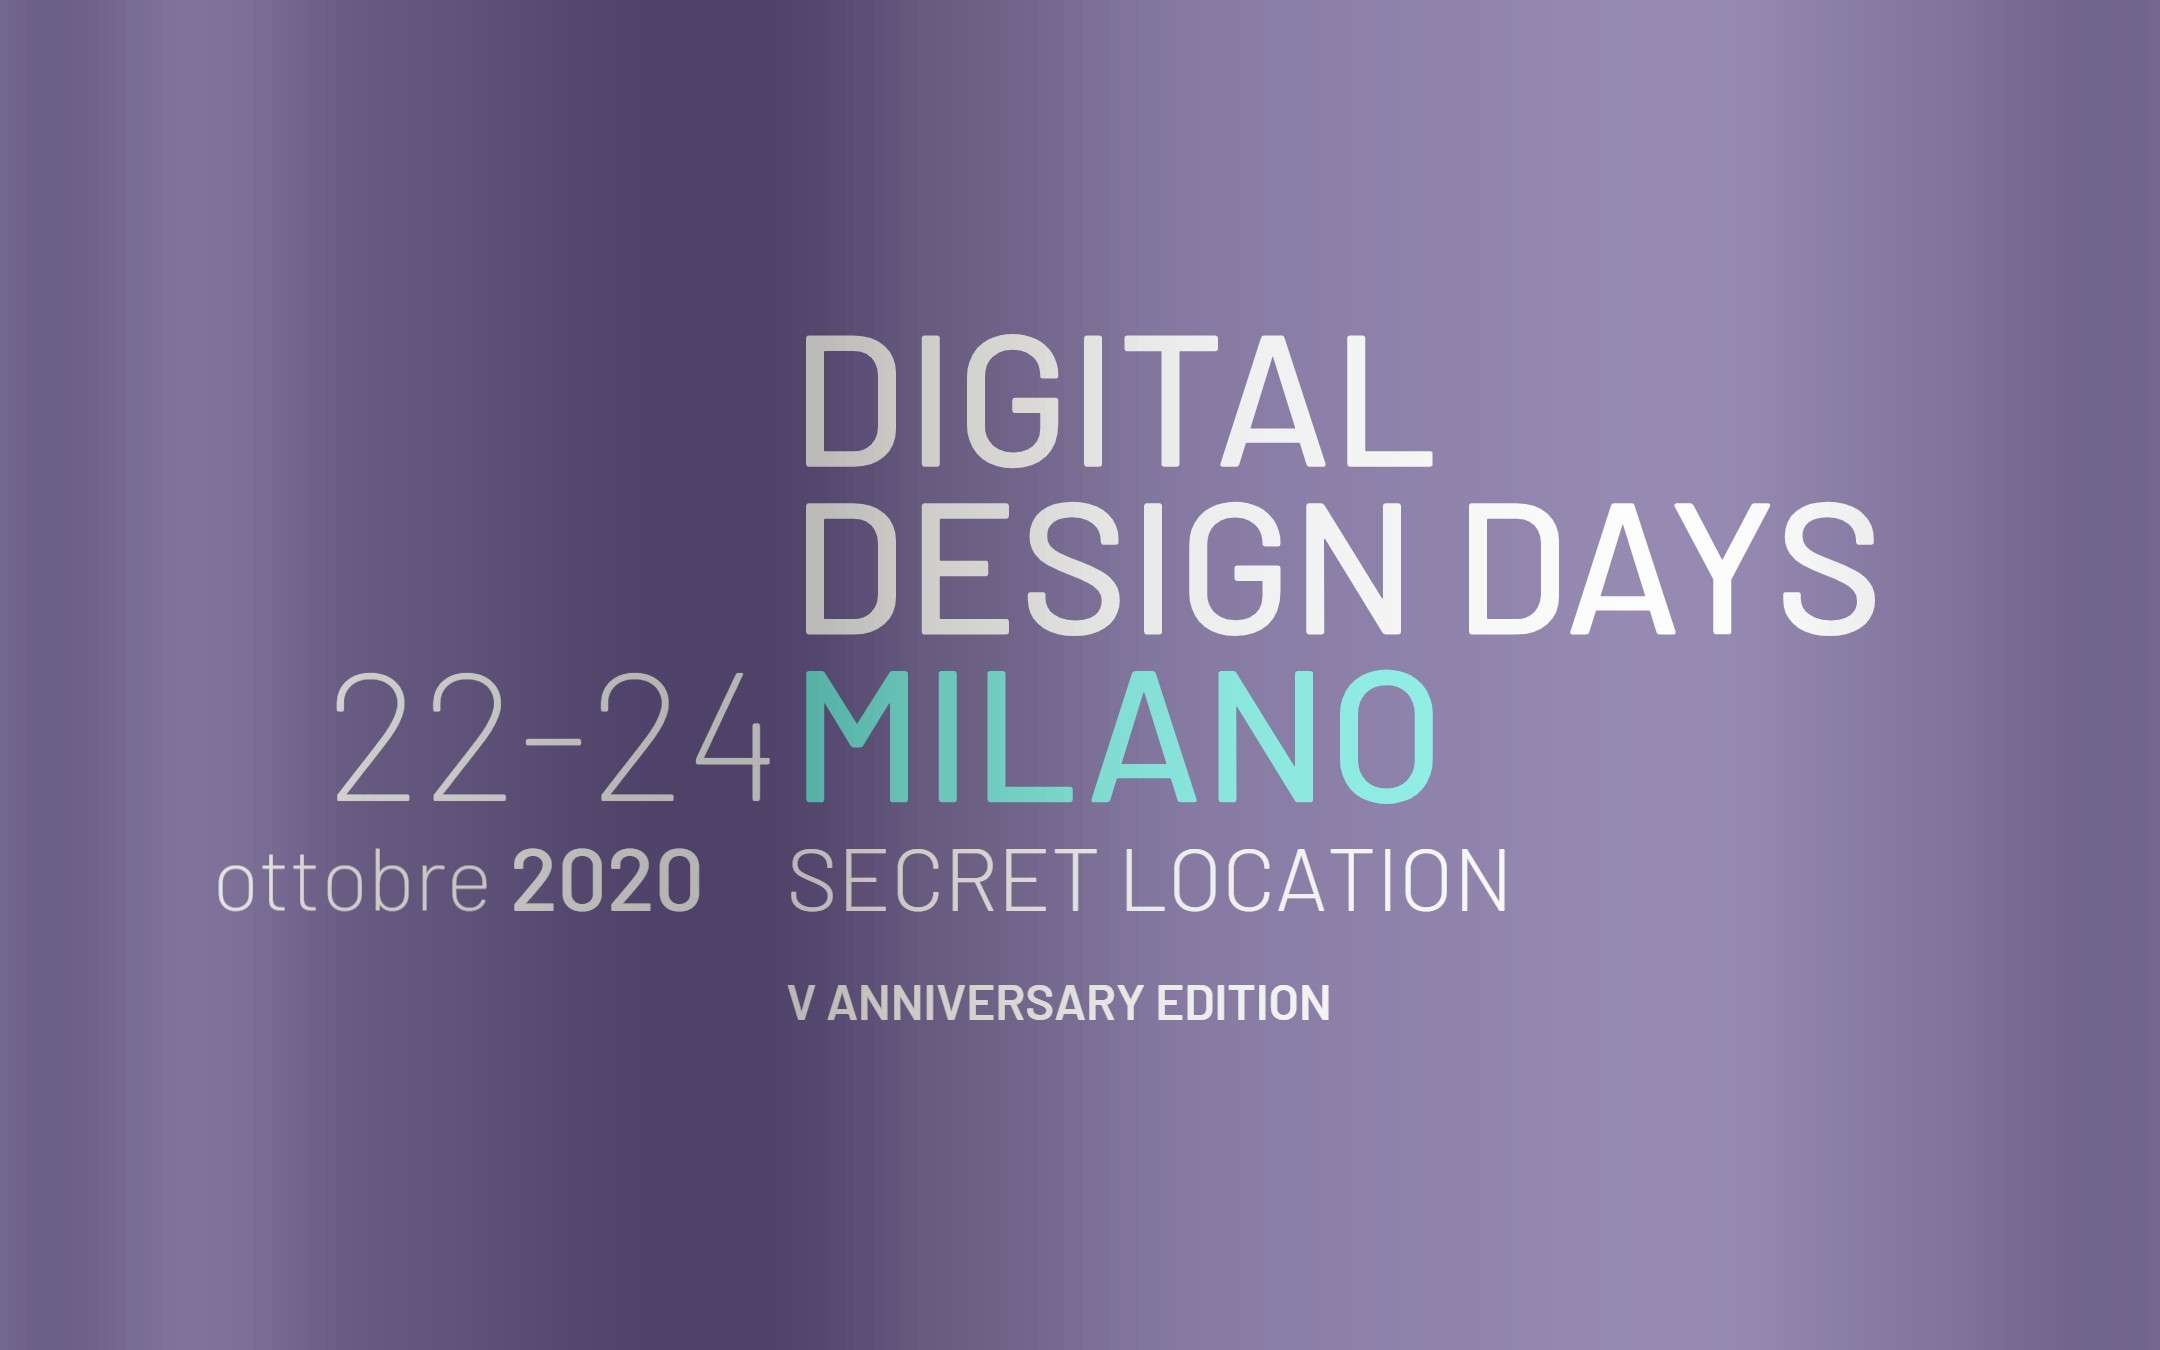 Digital Design Days, new edition in October